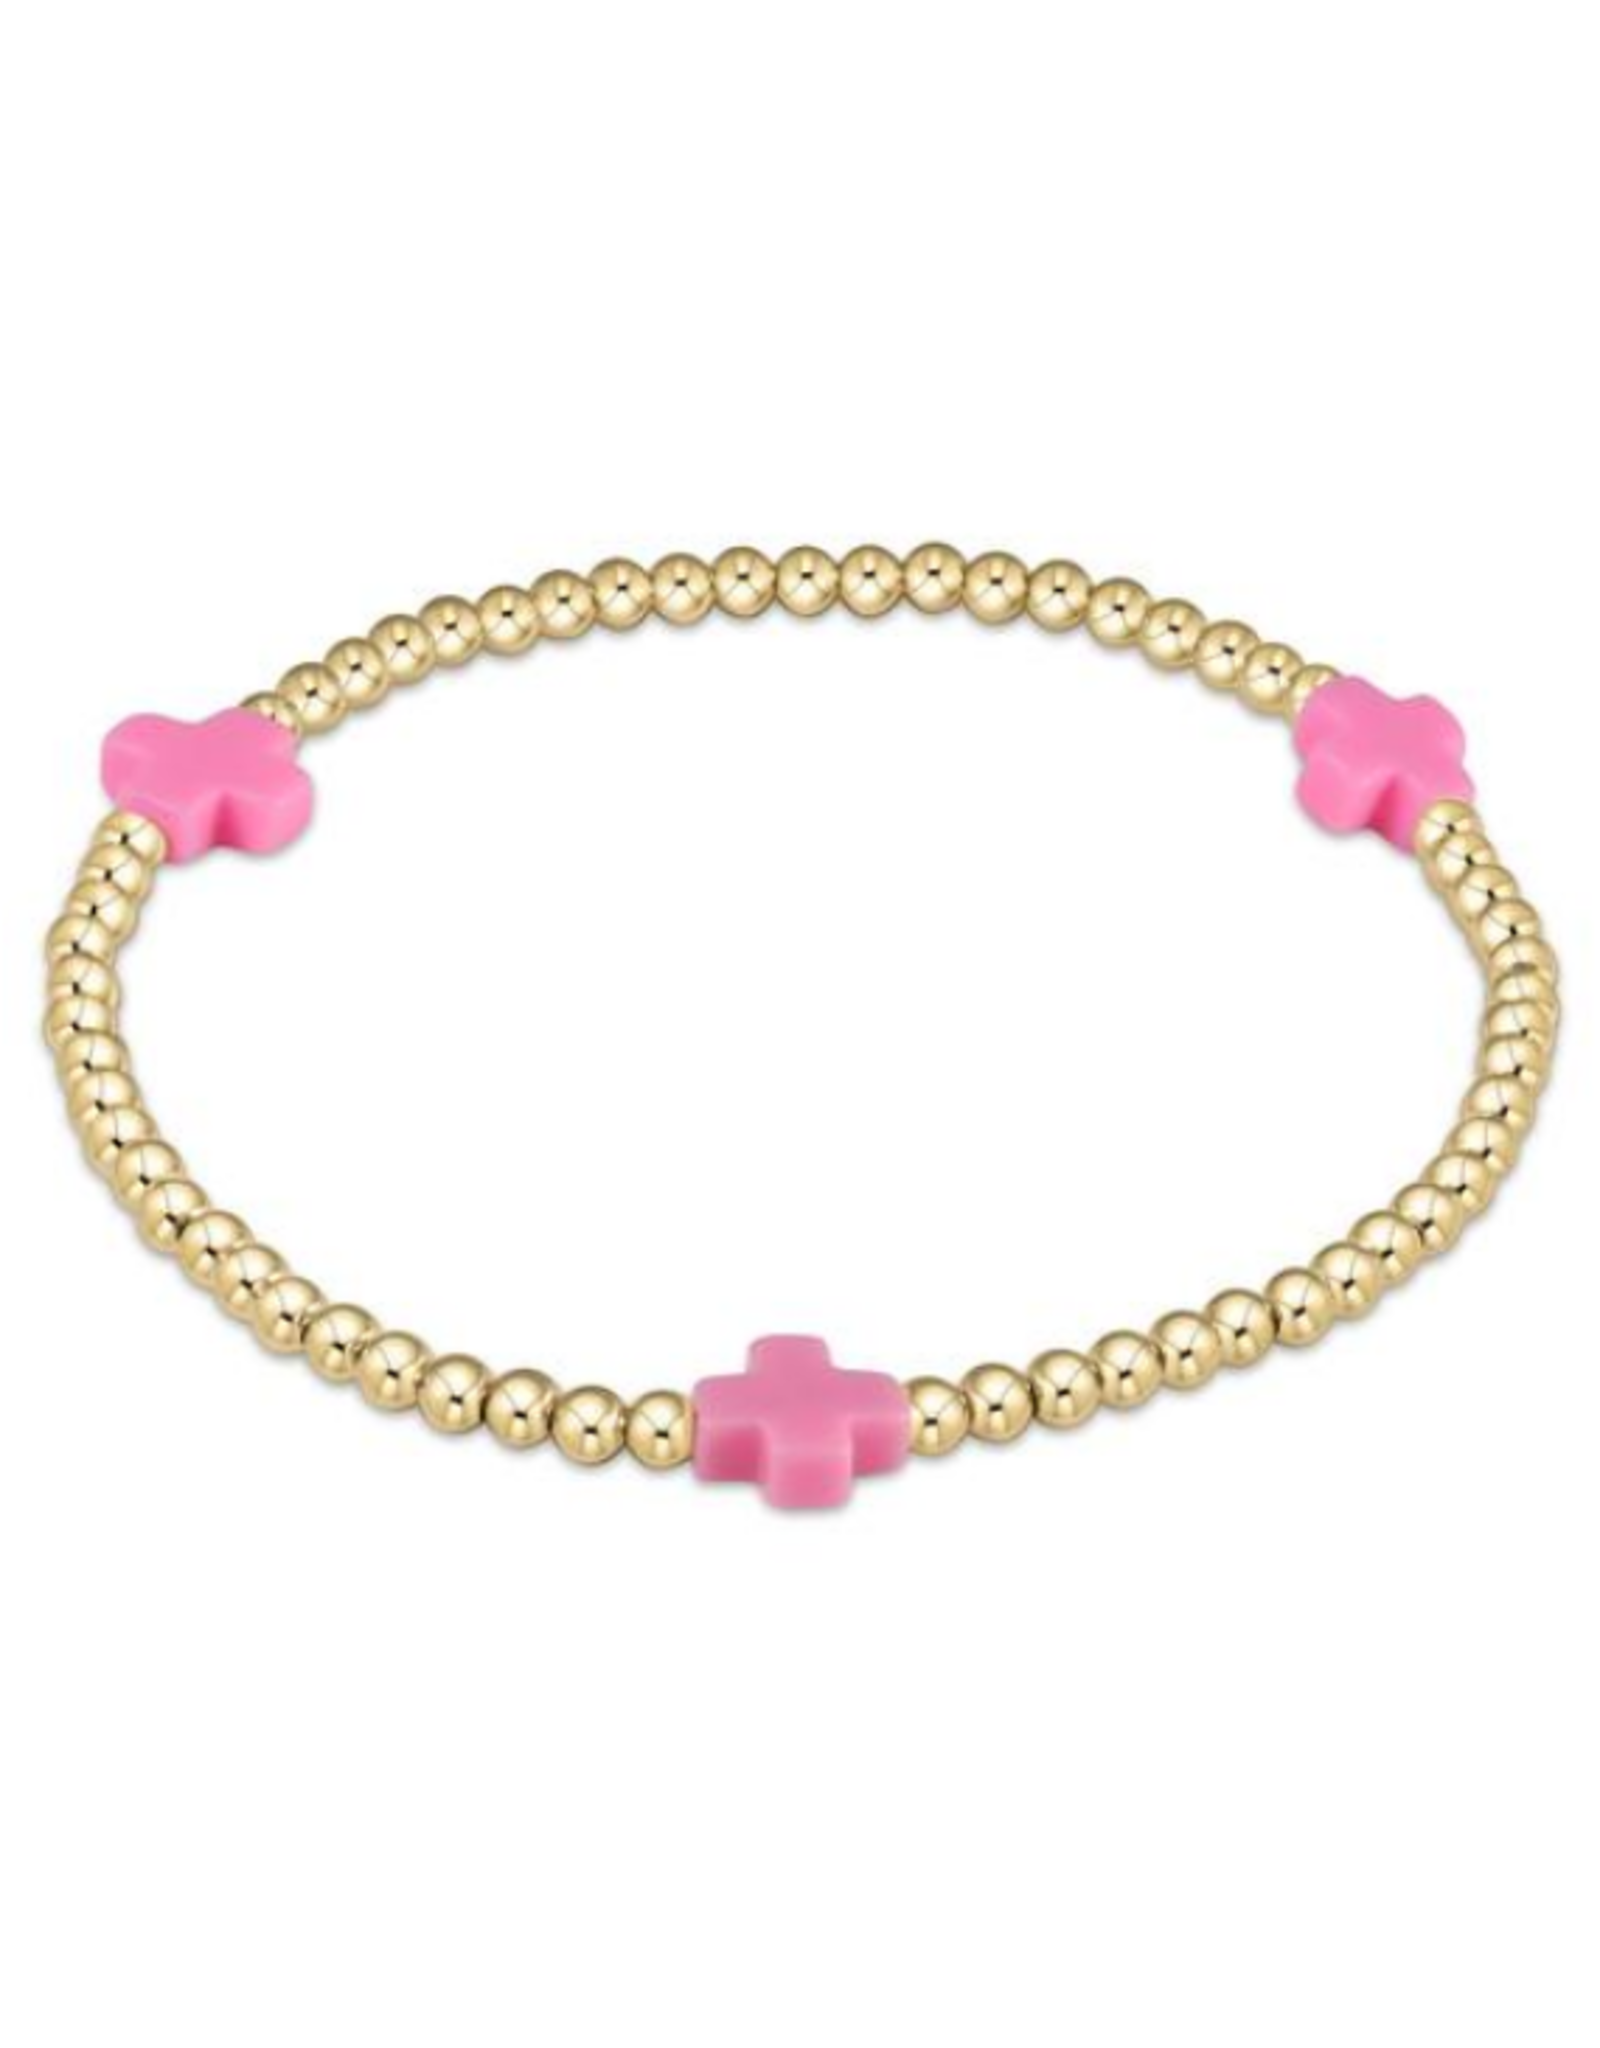 enewton Signature Cross Gold Pattern 3mm Bead Bracelet - Bright Pink